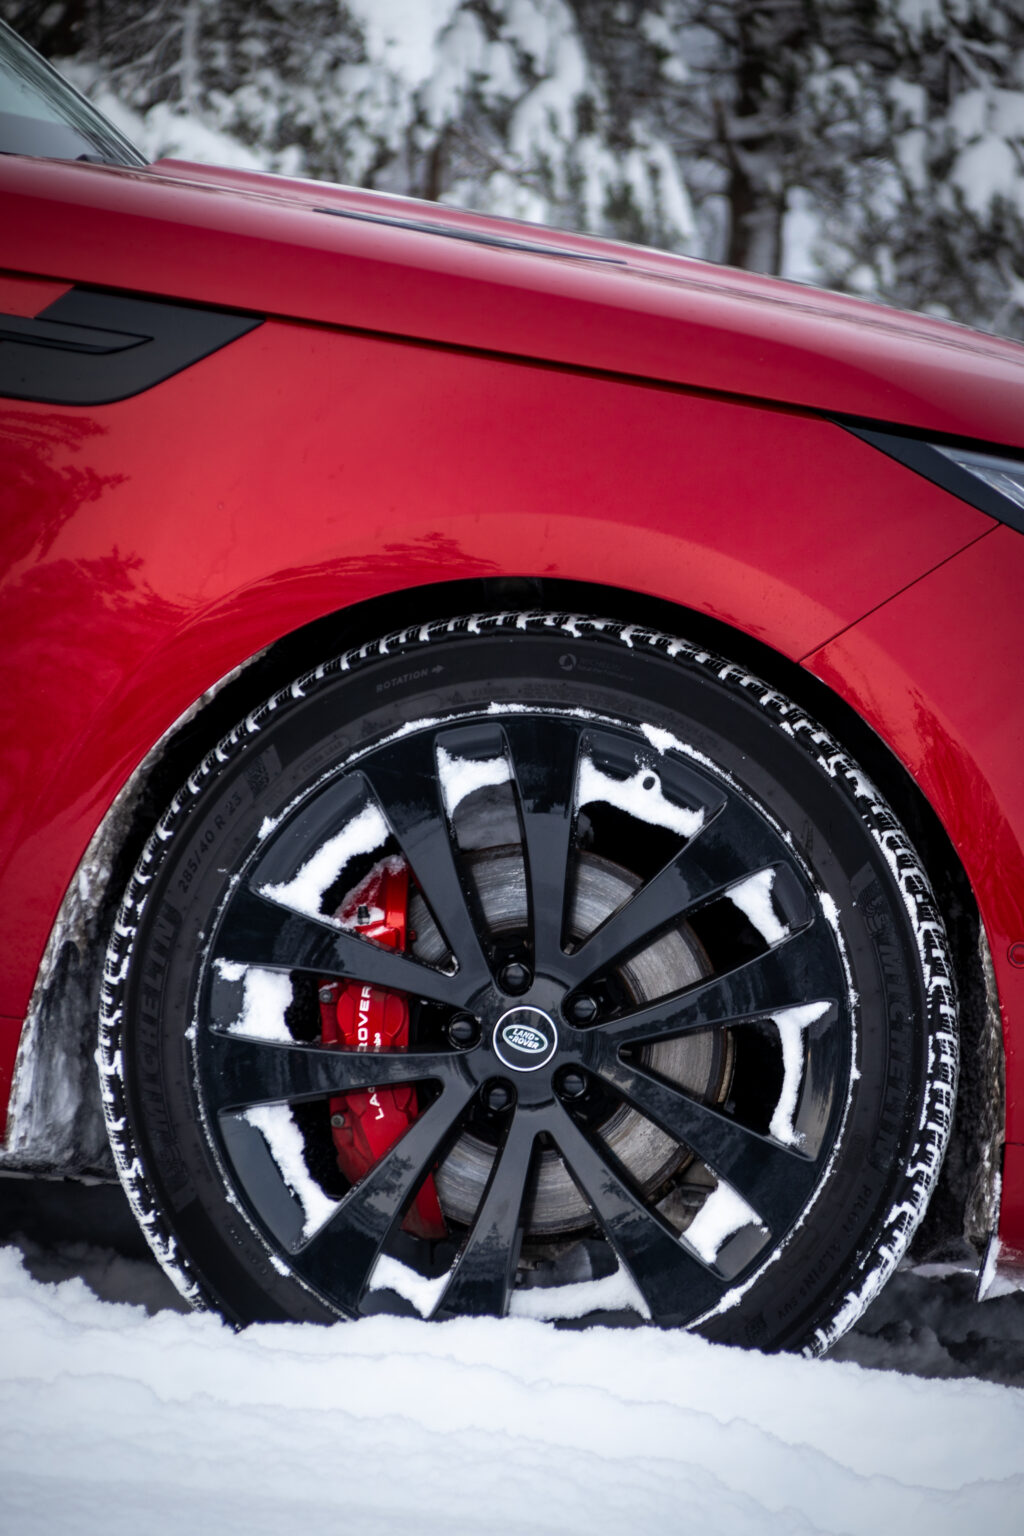 Range Rover Sport snow